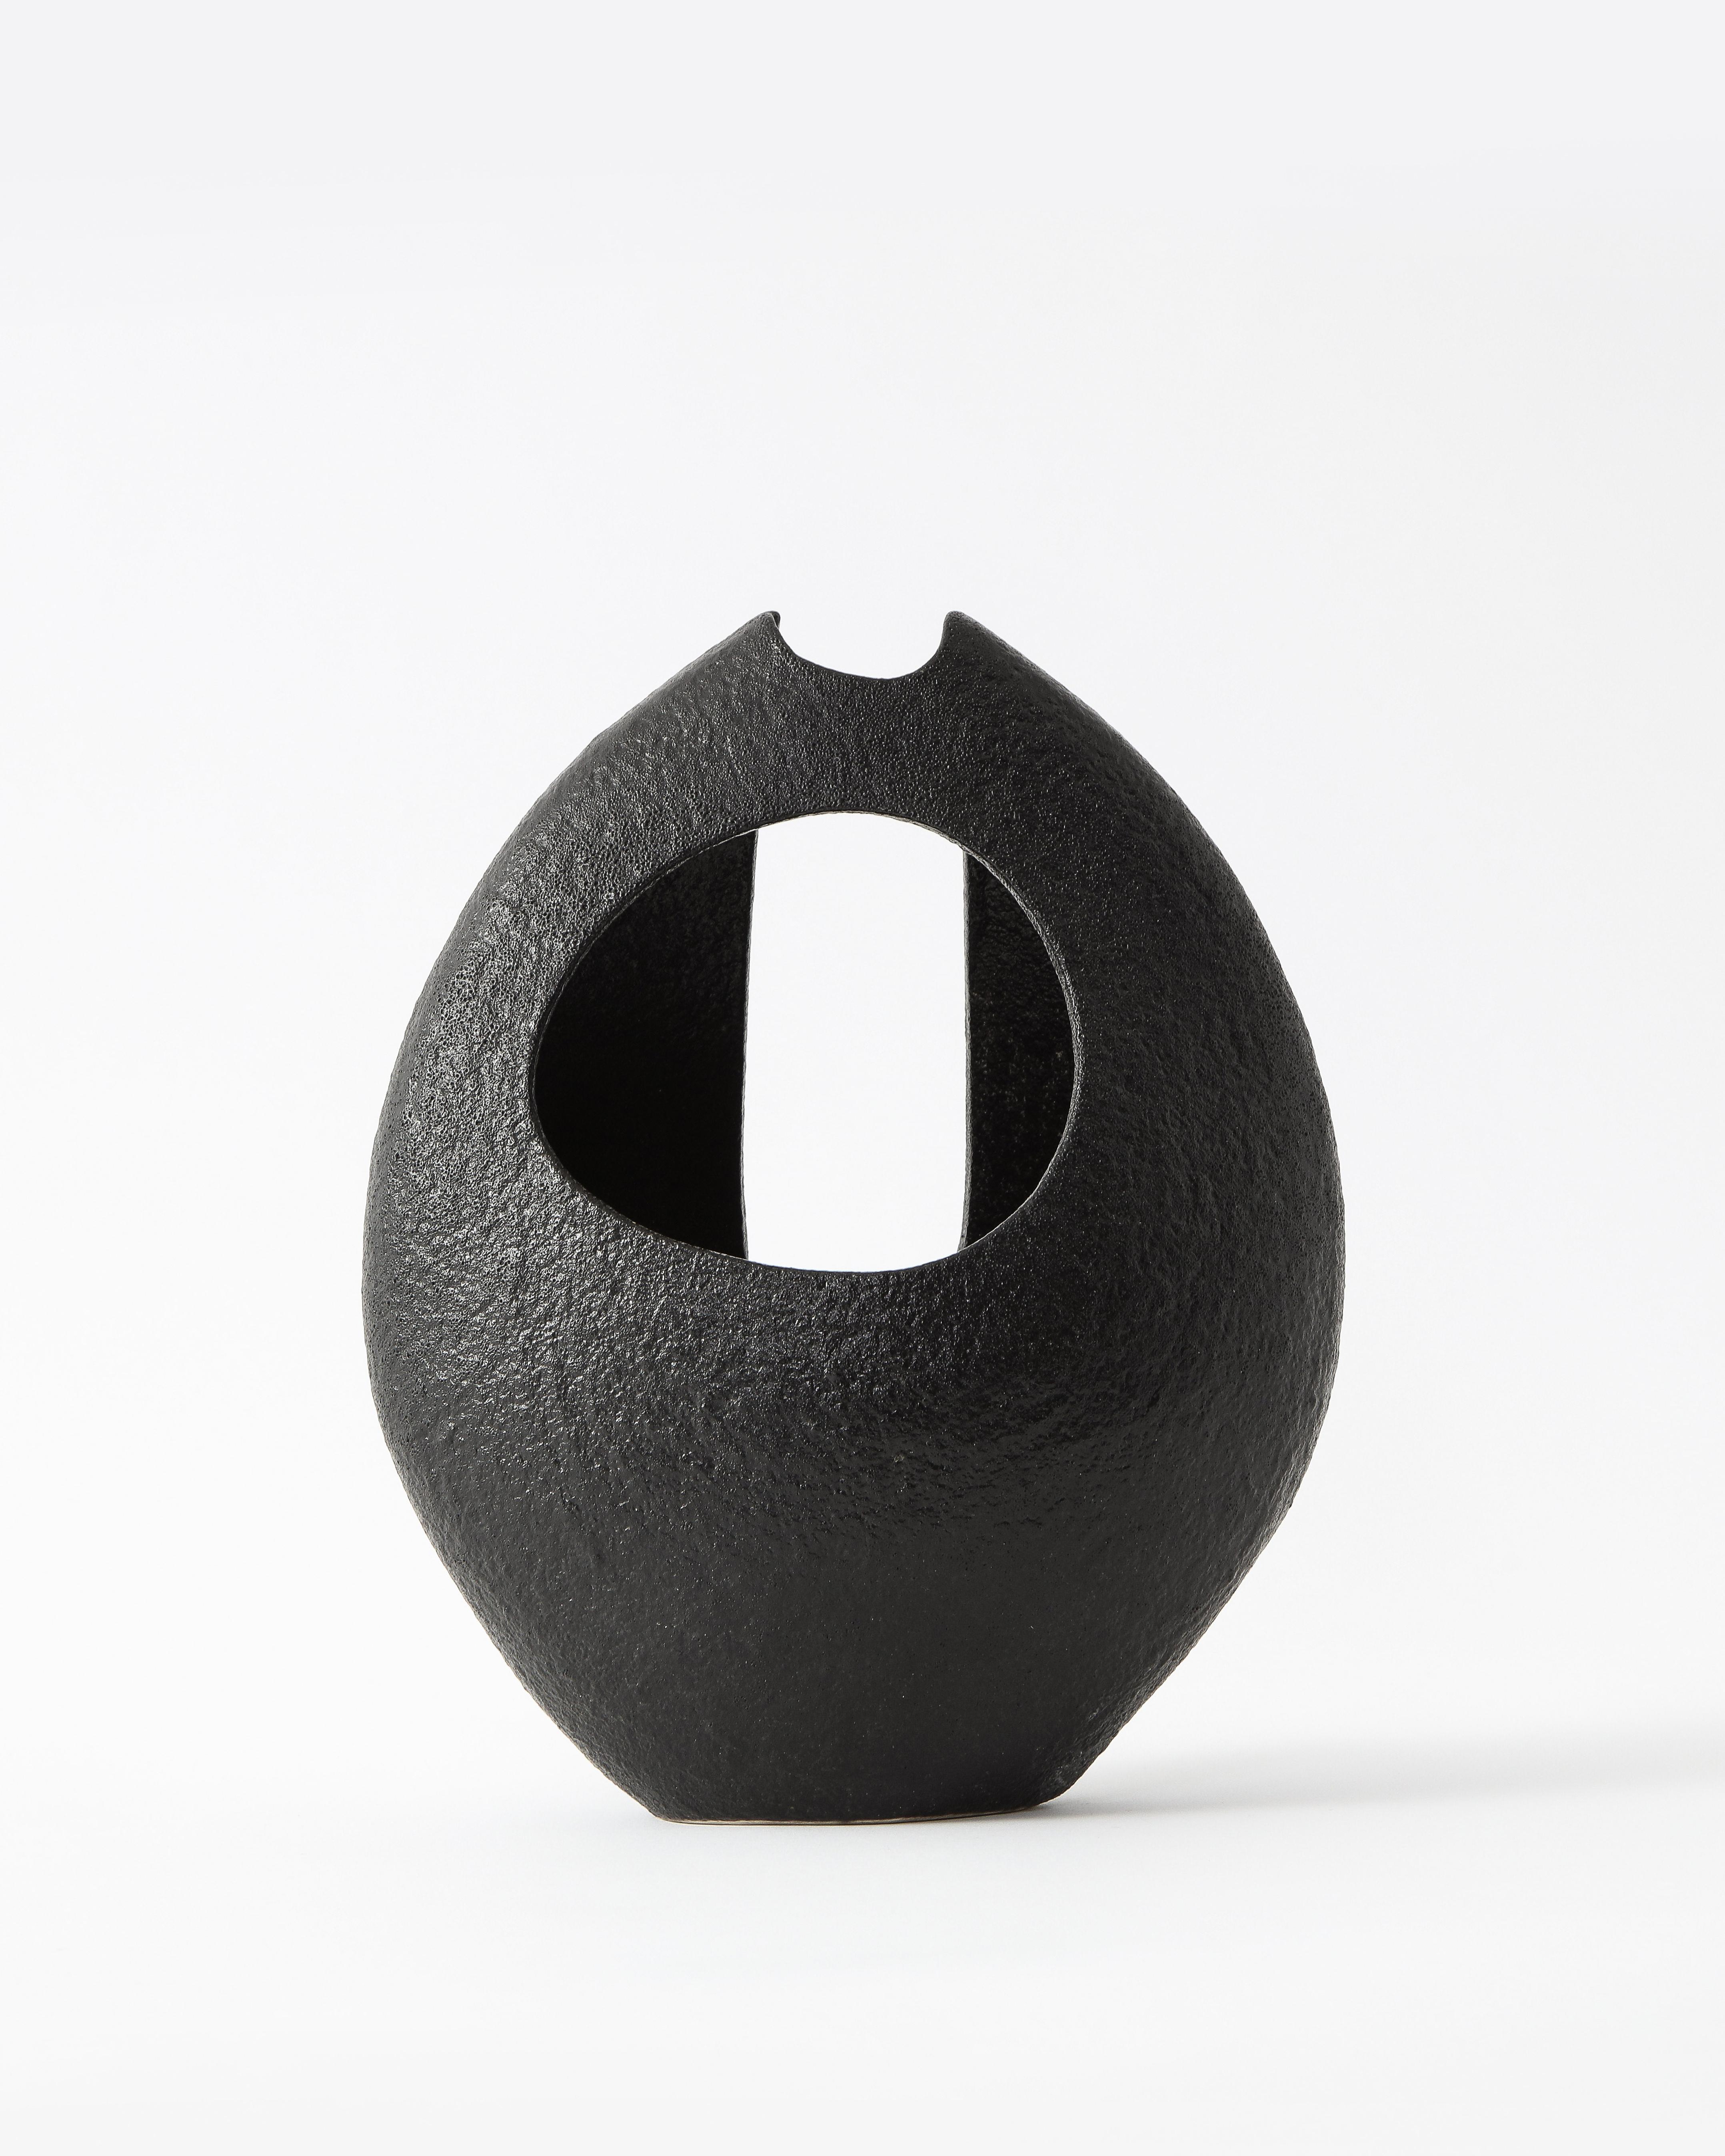 Asymmetrical Almond-Shaped Black Textured Japanese Ceramic Vessel 8